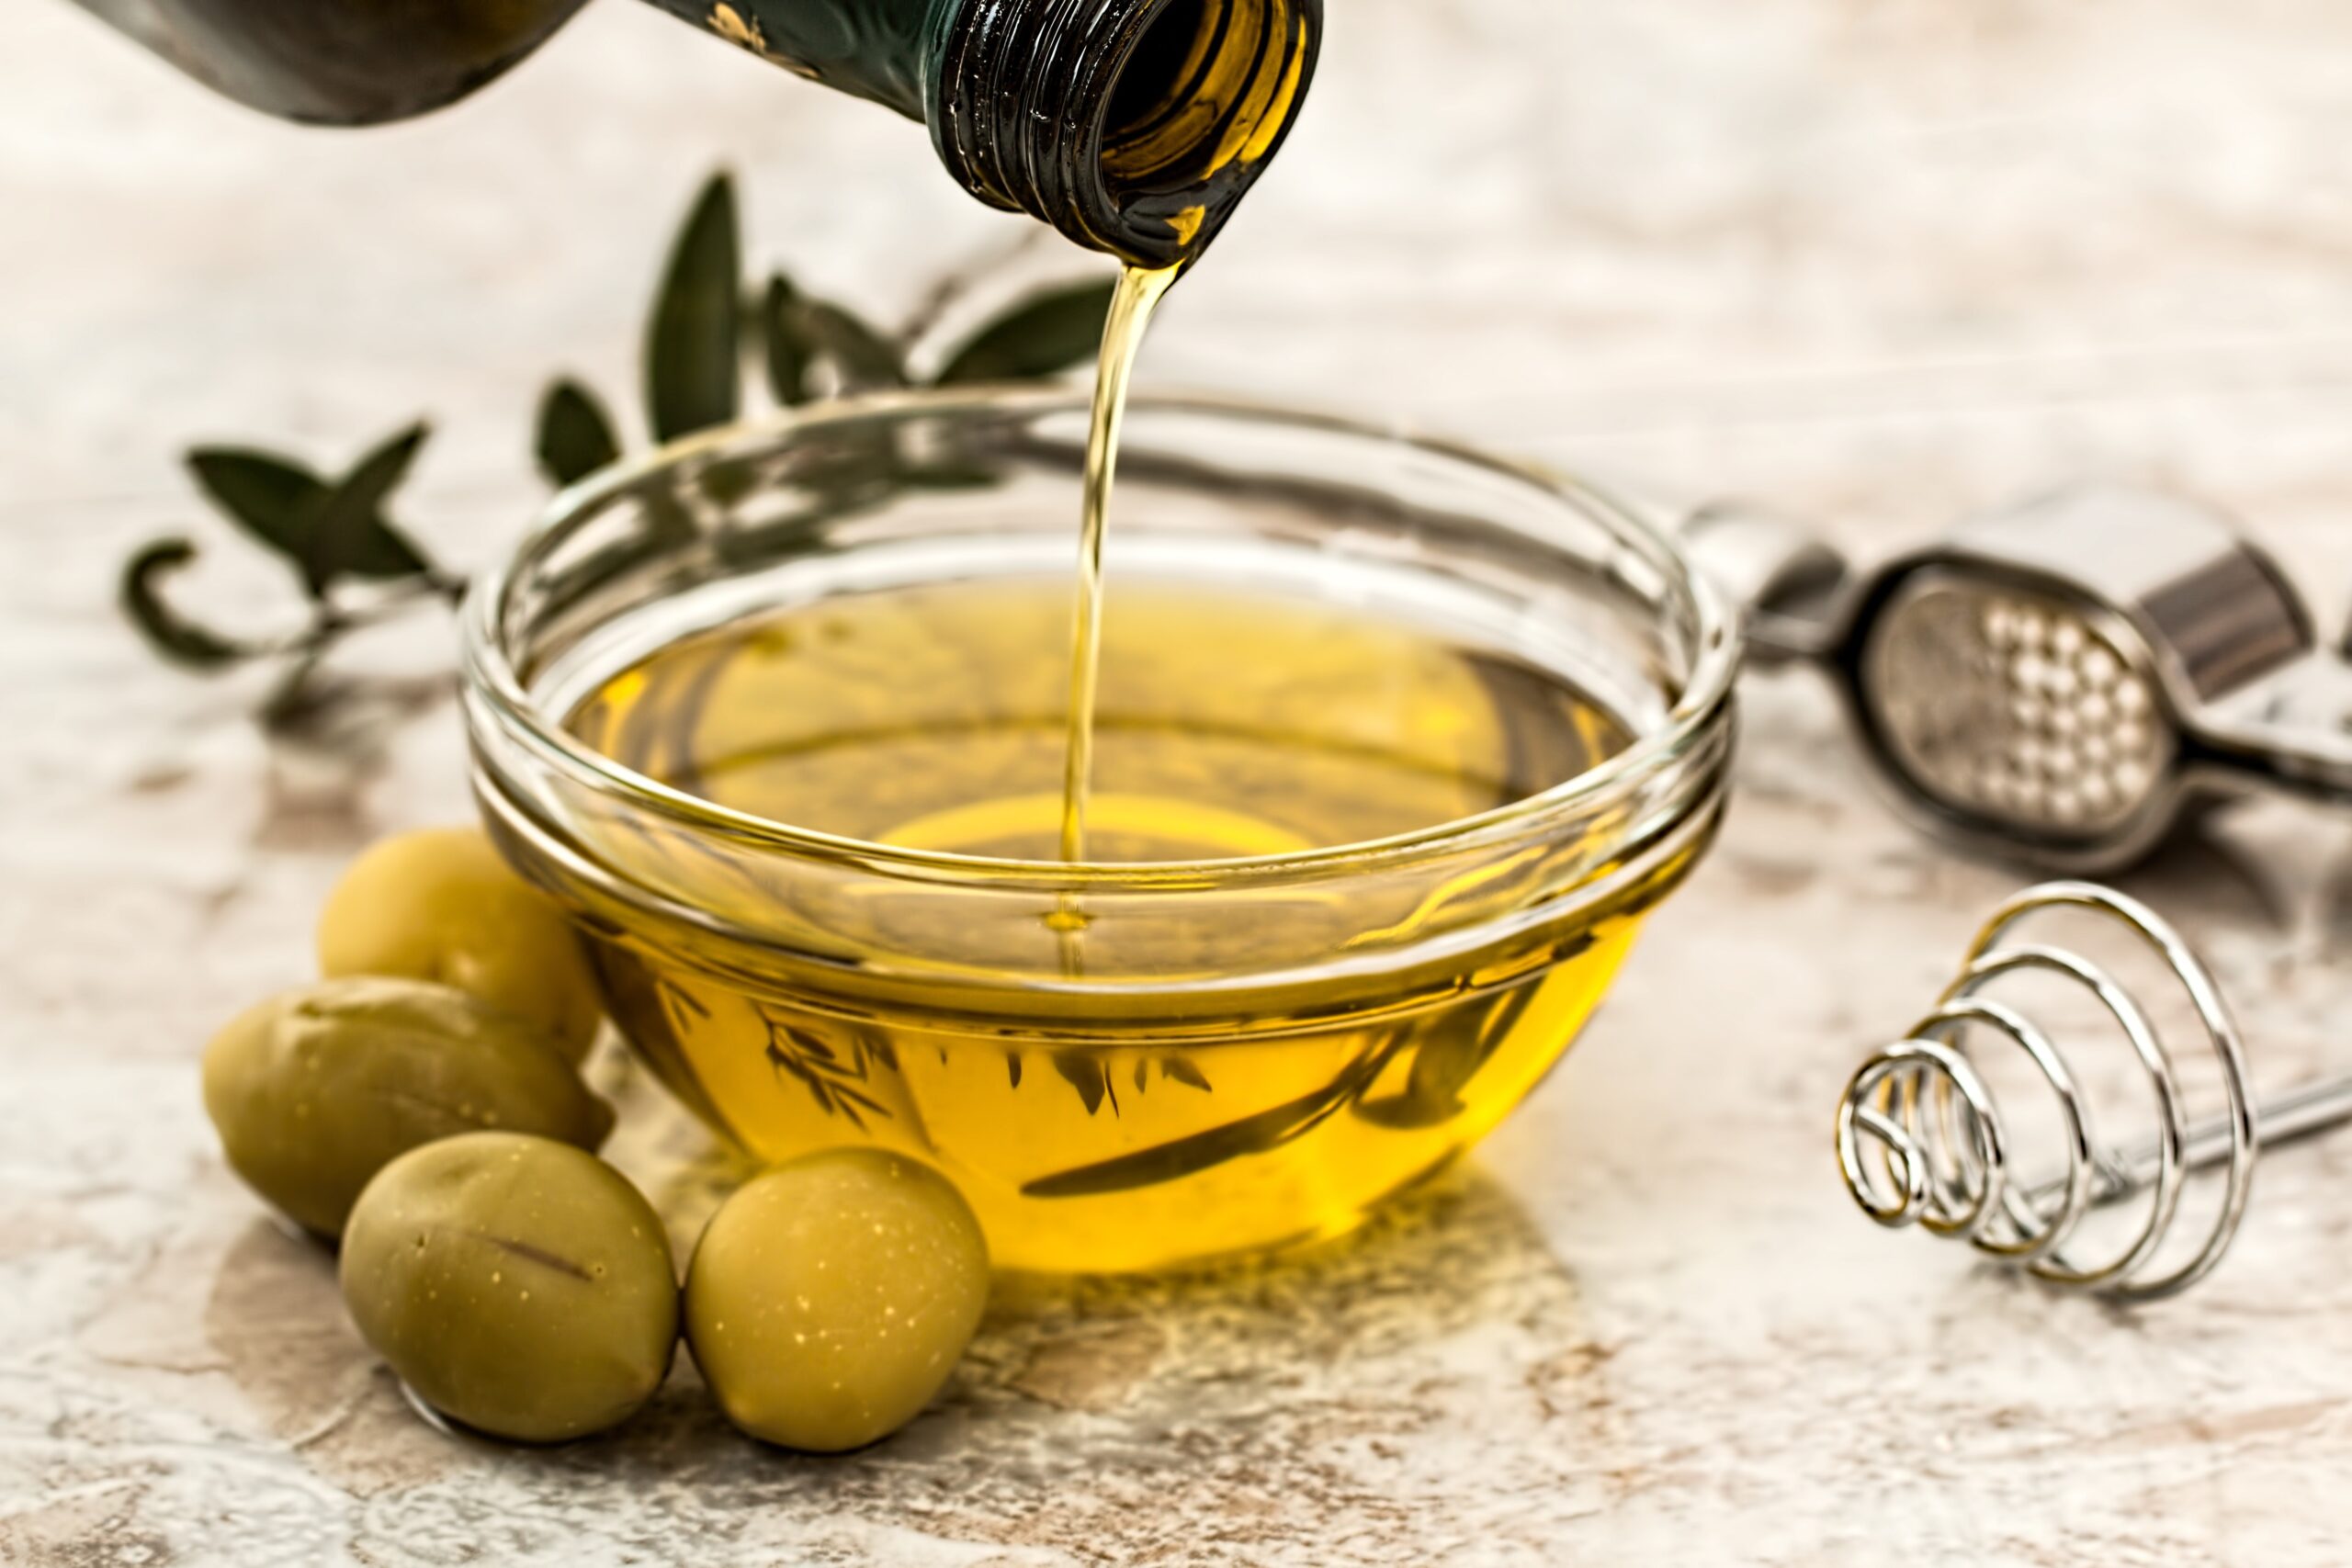 Is Saffola Oil Good For Health?